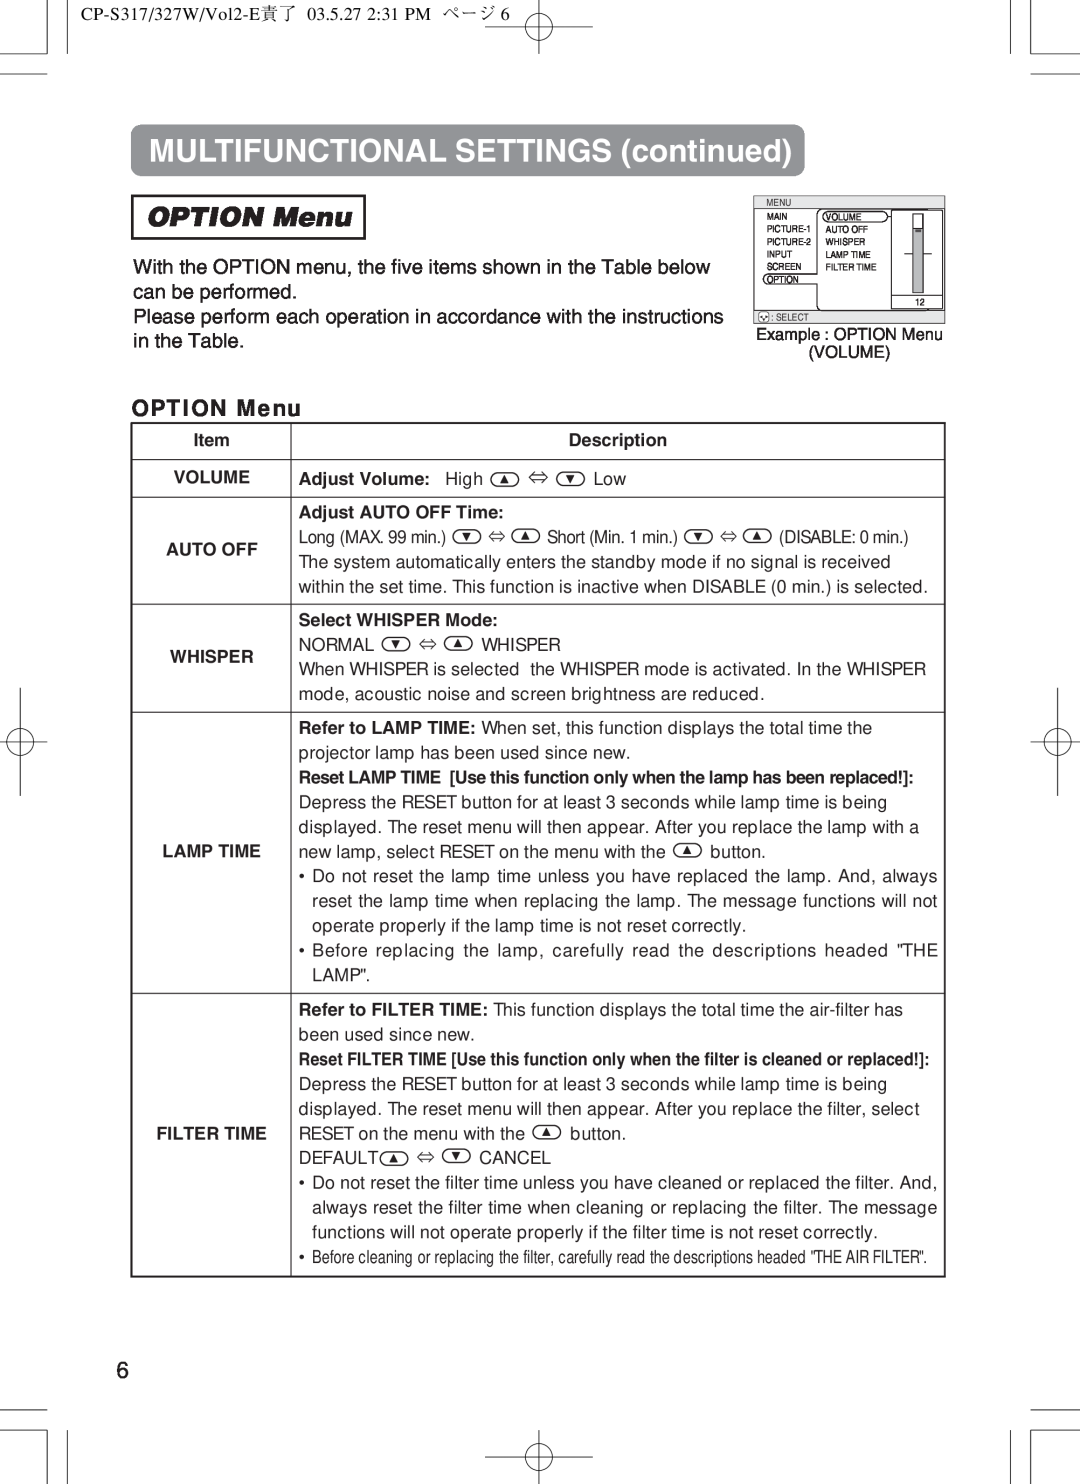 BOXLIGHT CP-322I user manual OPTION Menu, MULTIFUNCTIONAL SETTINGS continued 